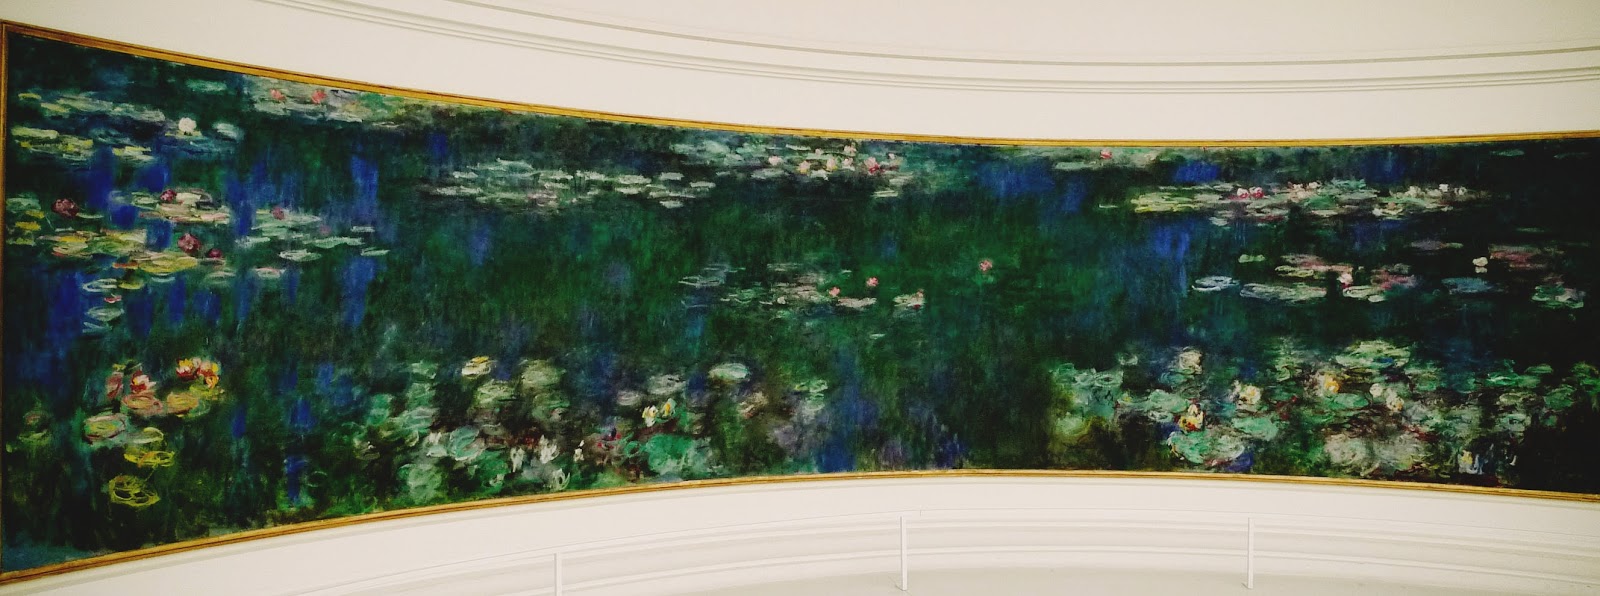 Claude+Monet-1840-1926 (1019).jpg